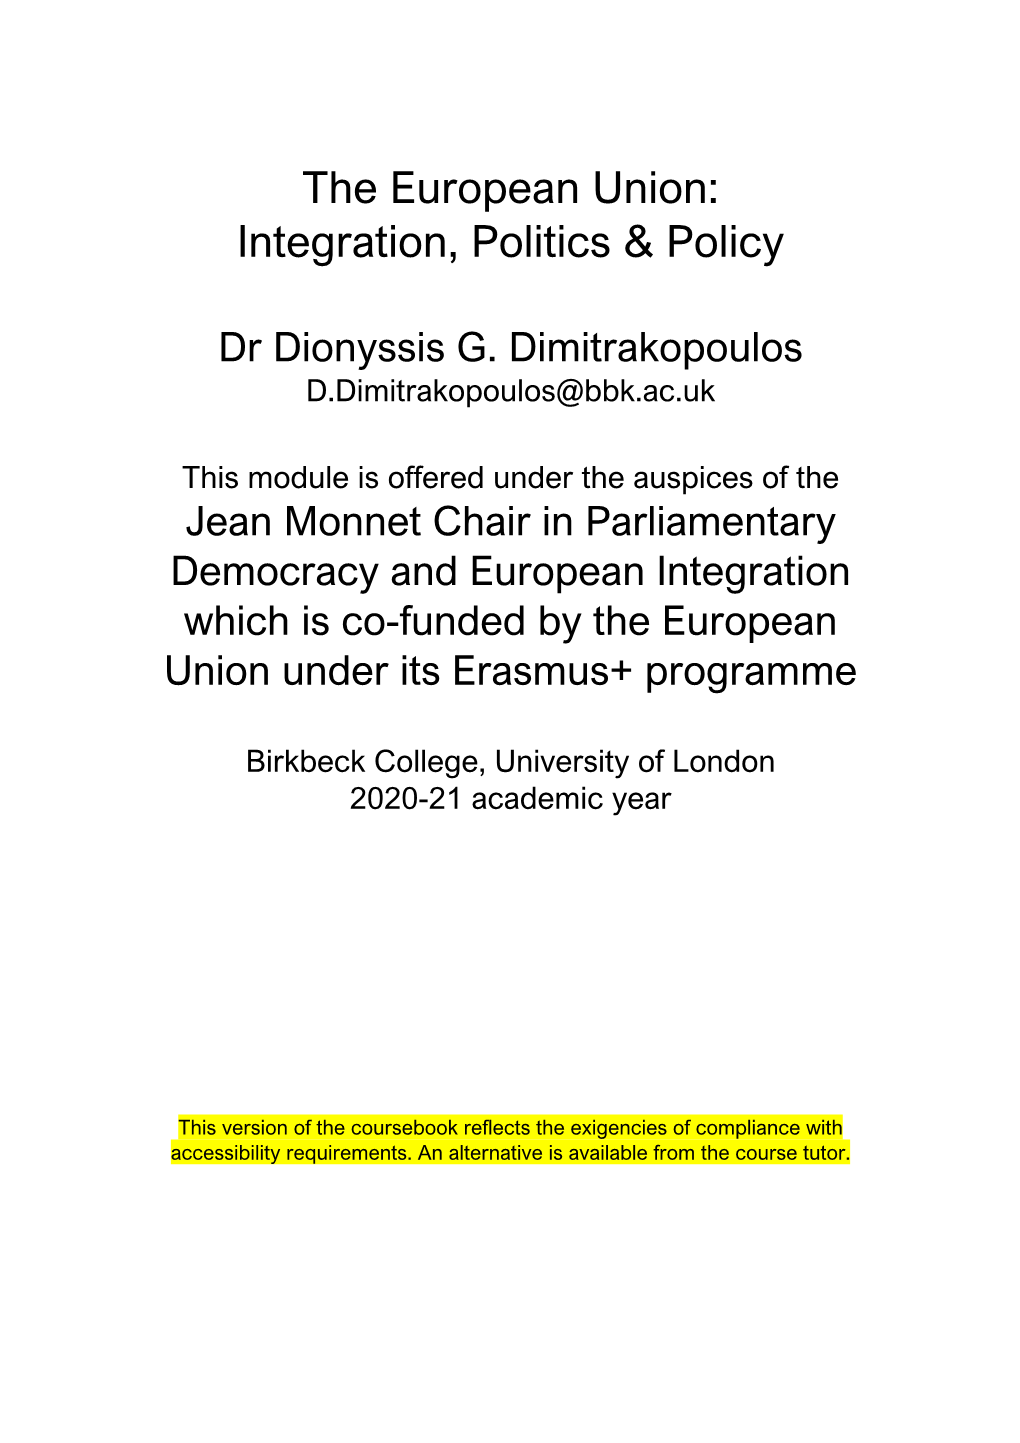 The European Union: Integration, Politics & Policy